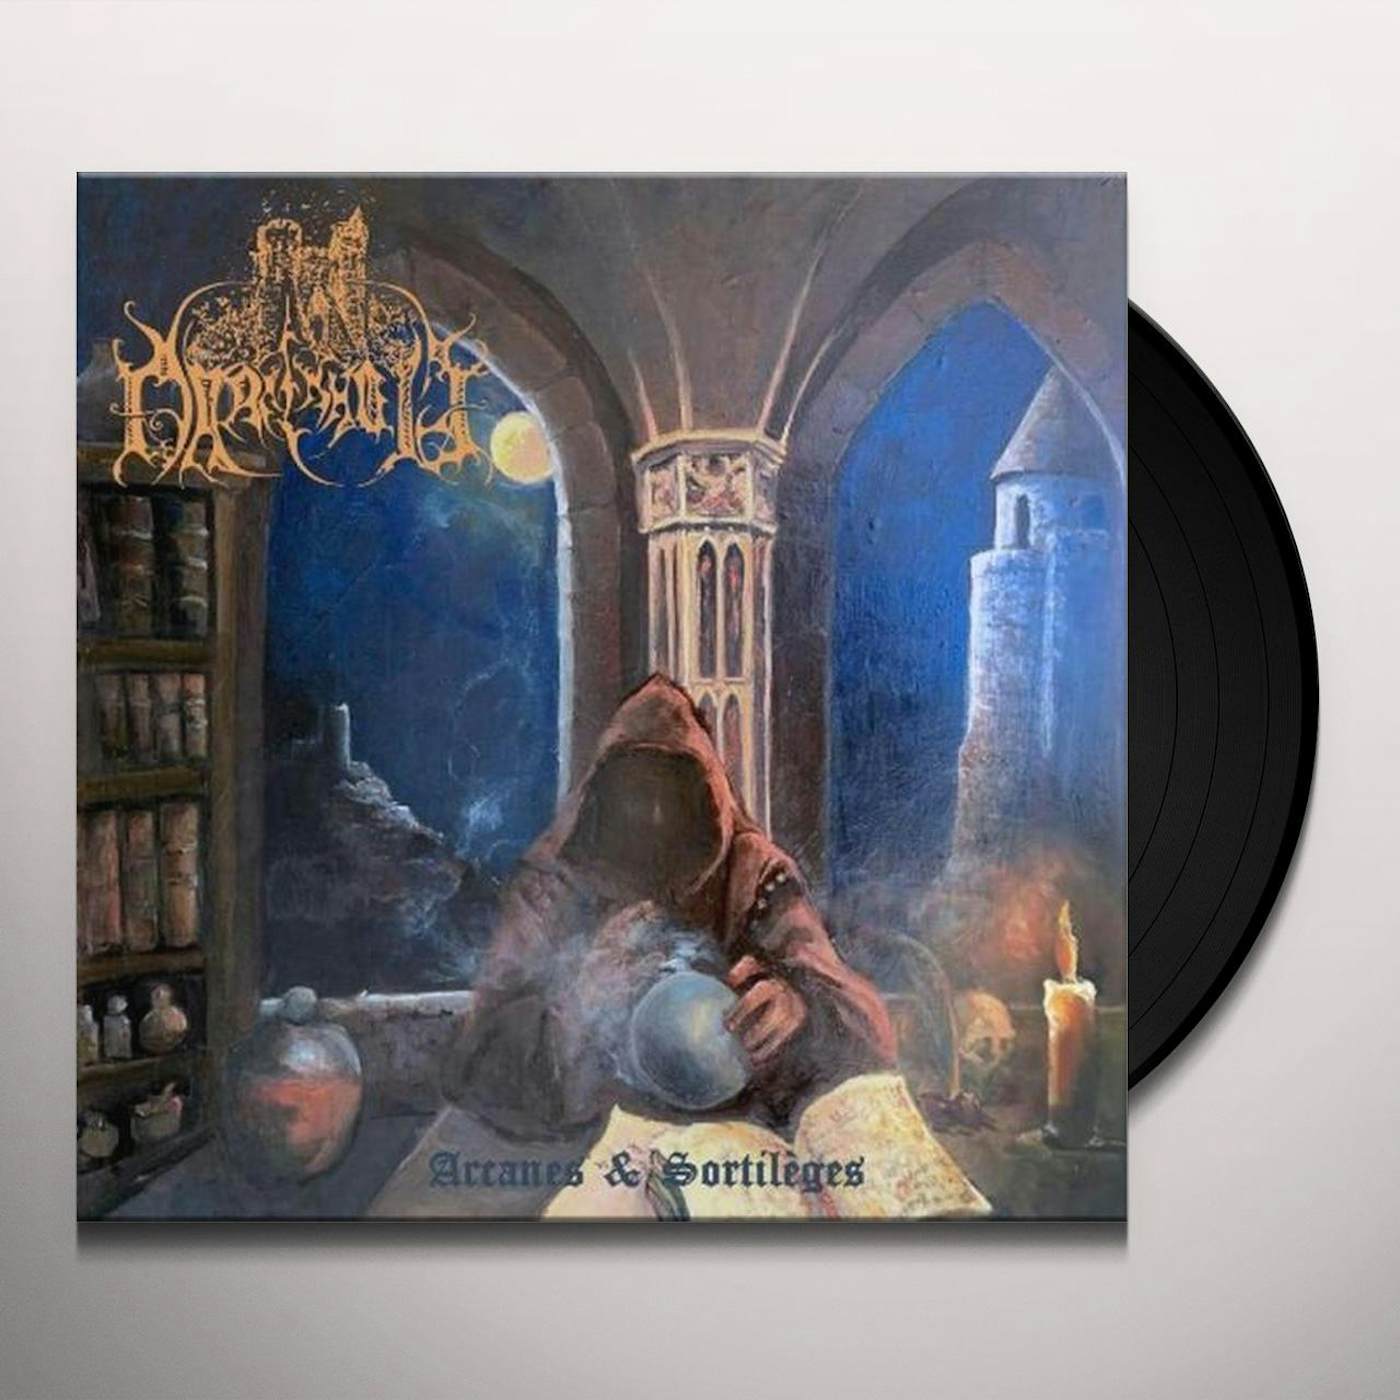 Darkenhöld ARCANES & SORTILEGES Vinyl Record